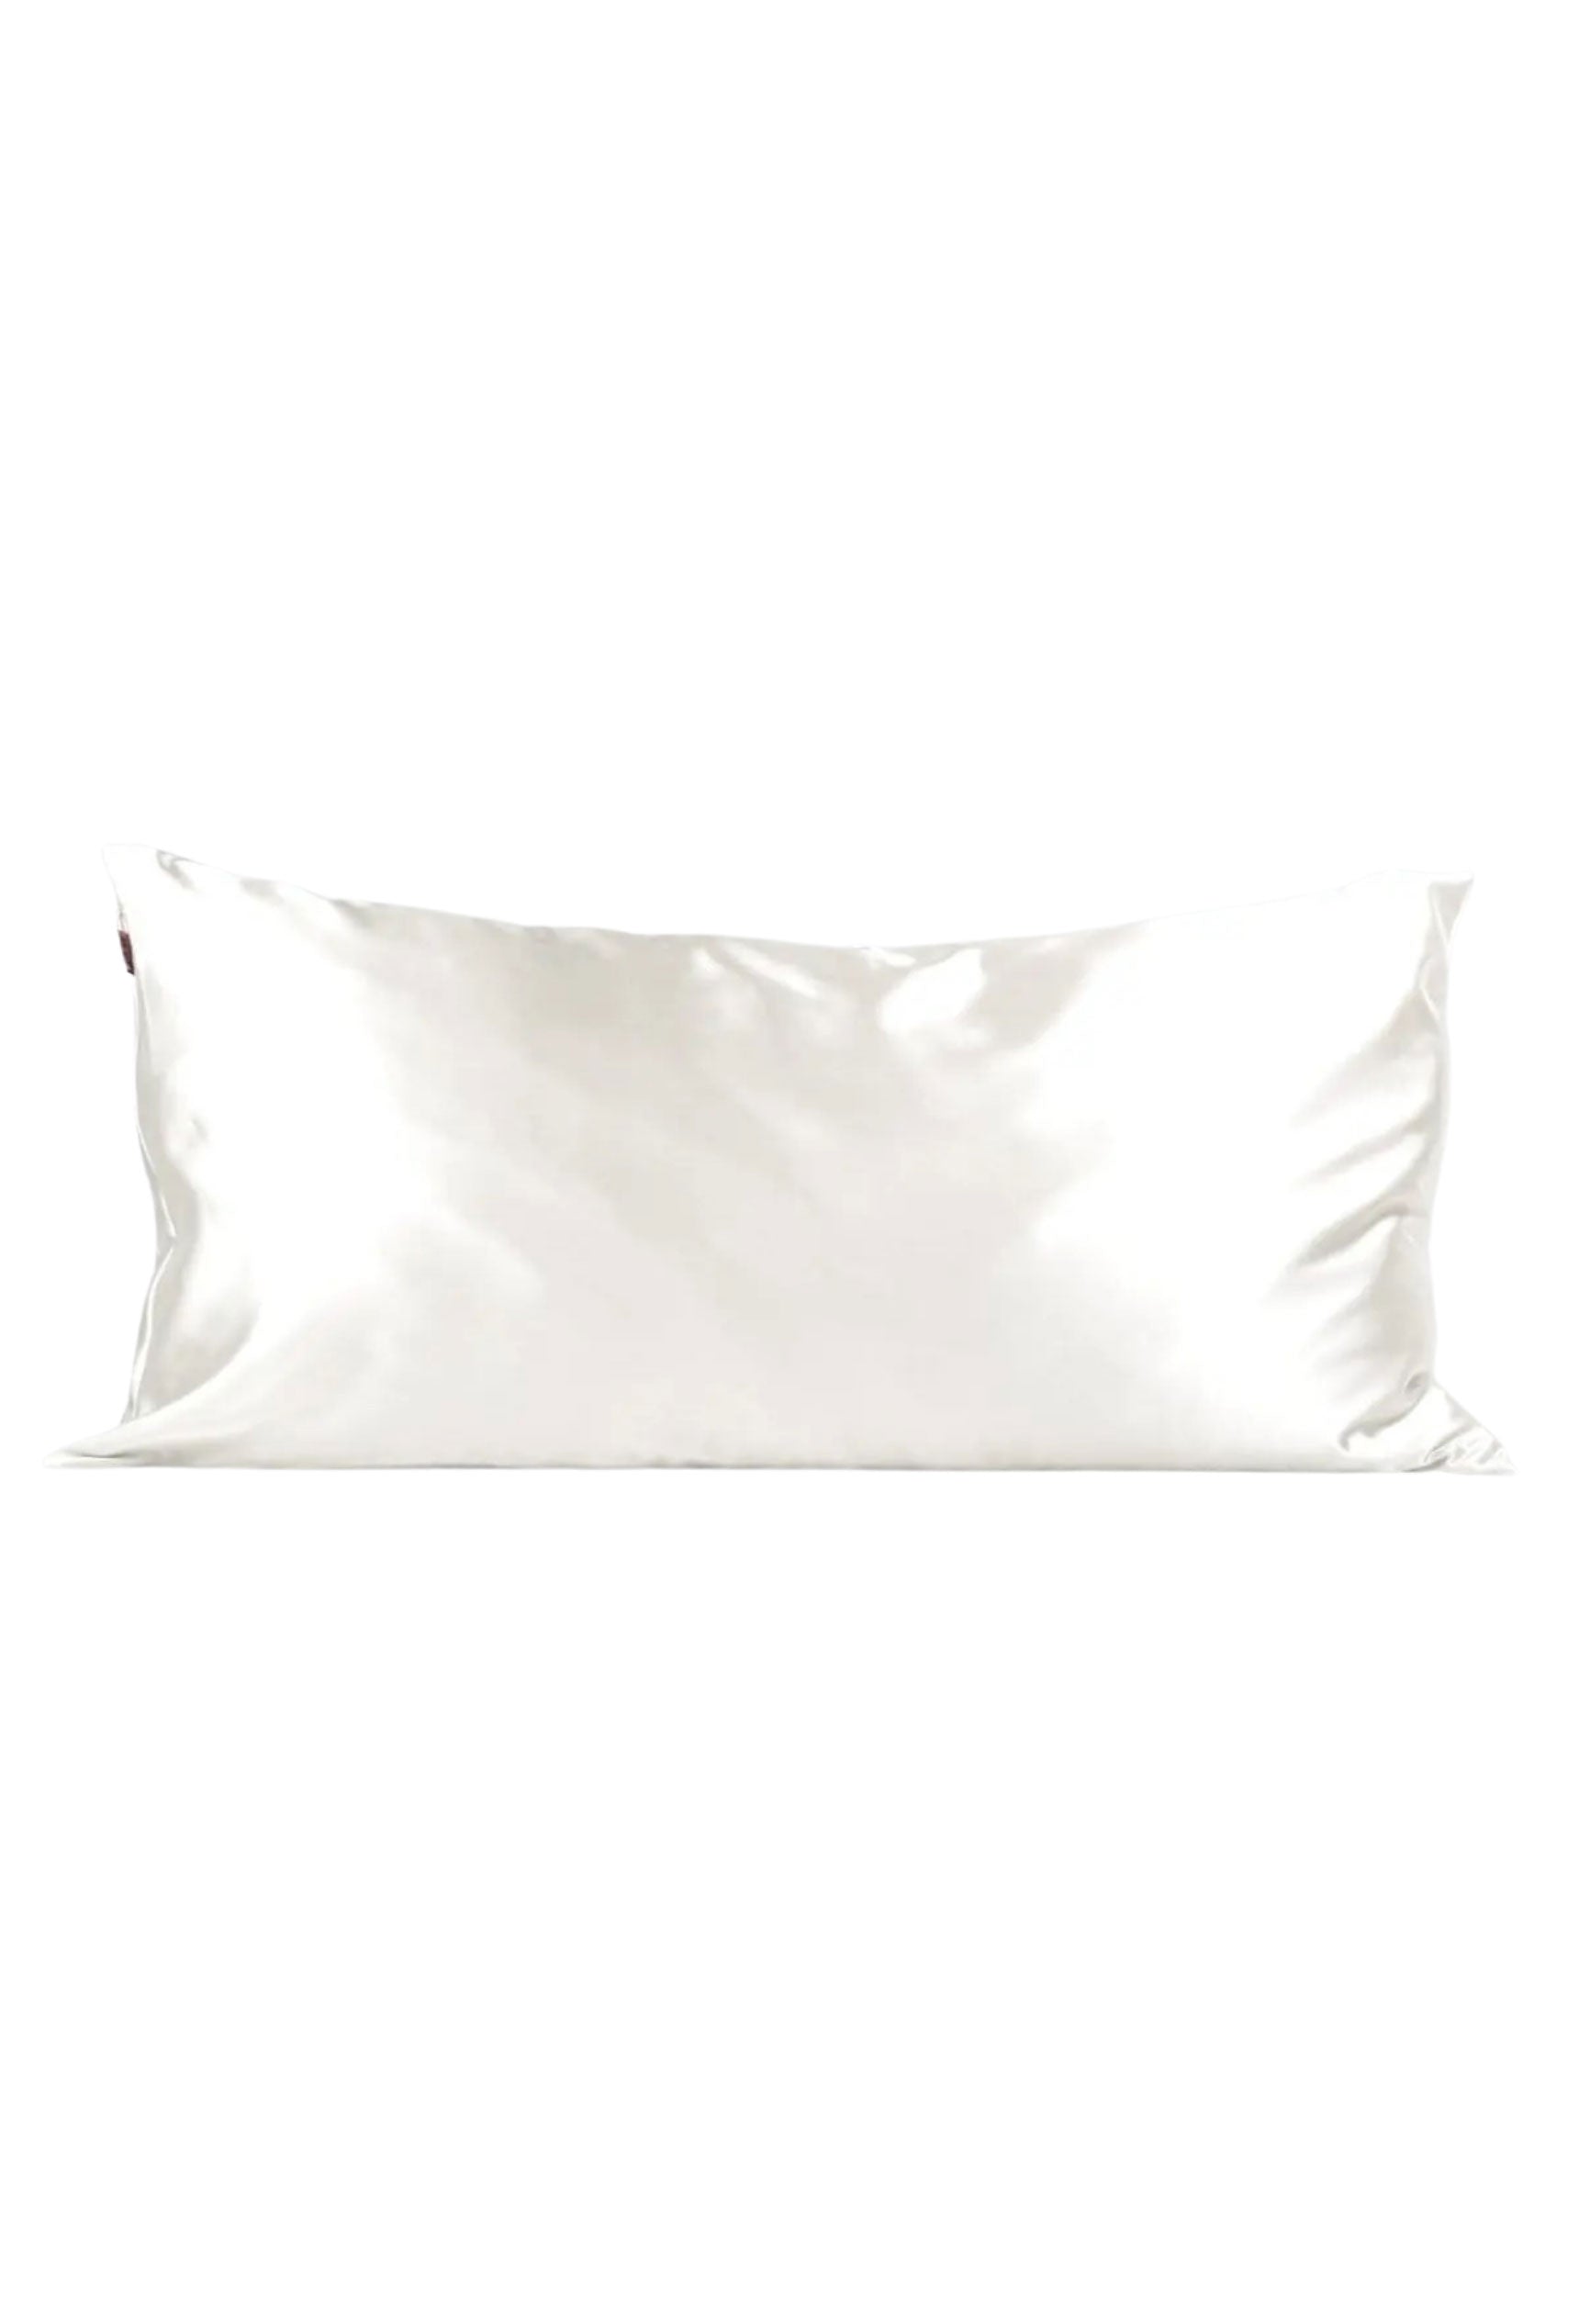 Kitsch - Satin Pillowcase King - Ivory